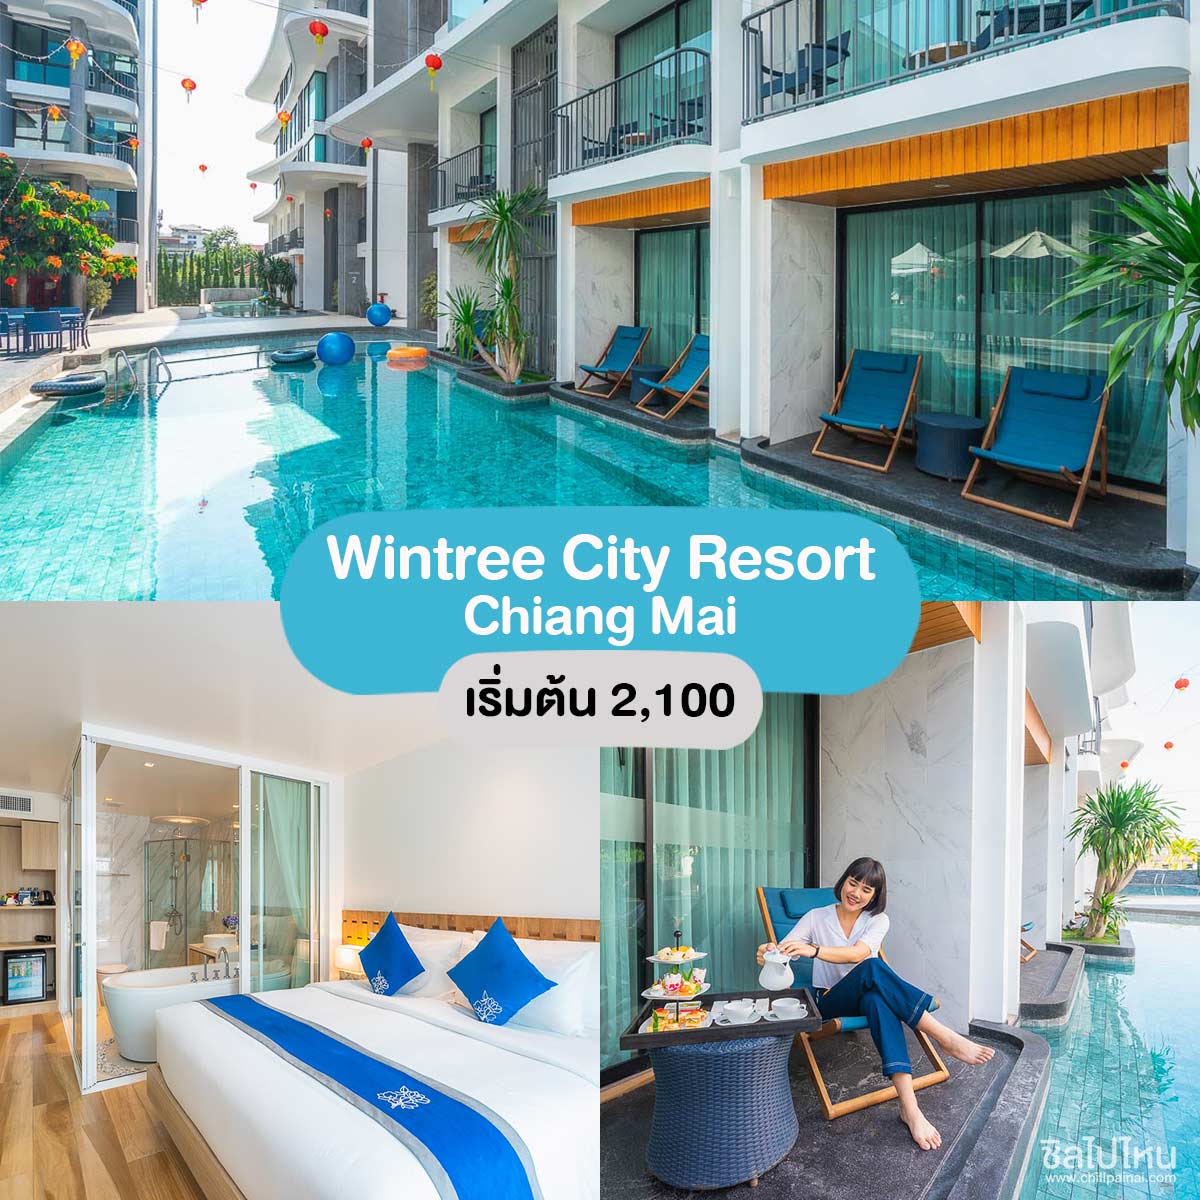 Wintree City Resort Chiang Mai